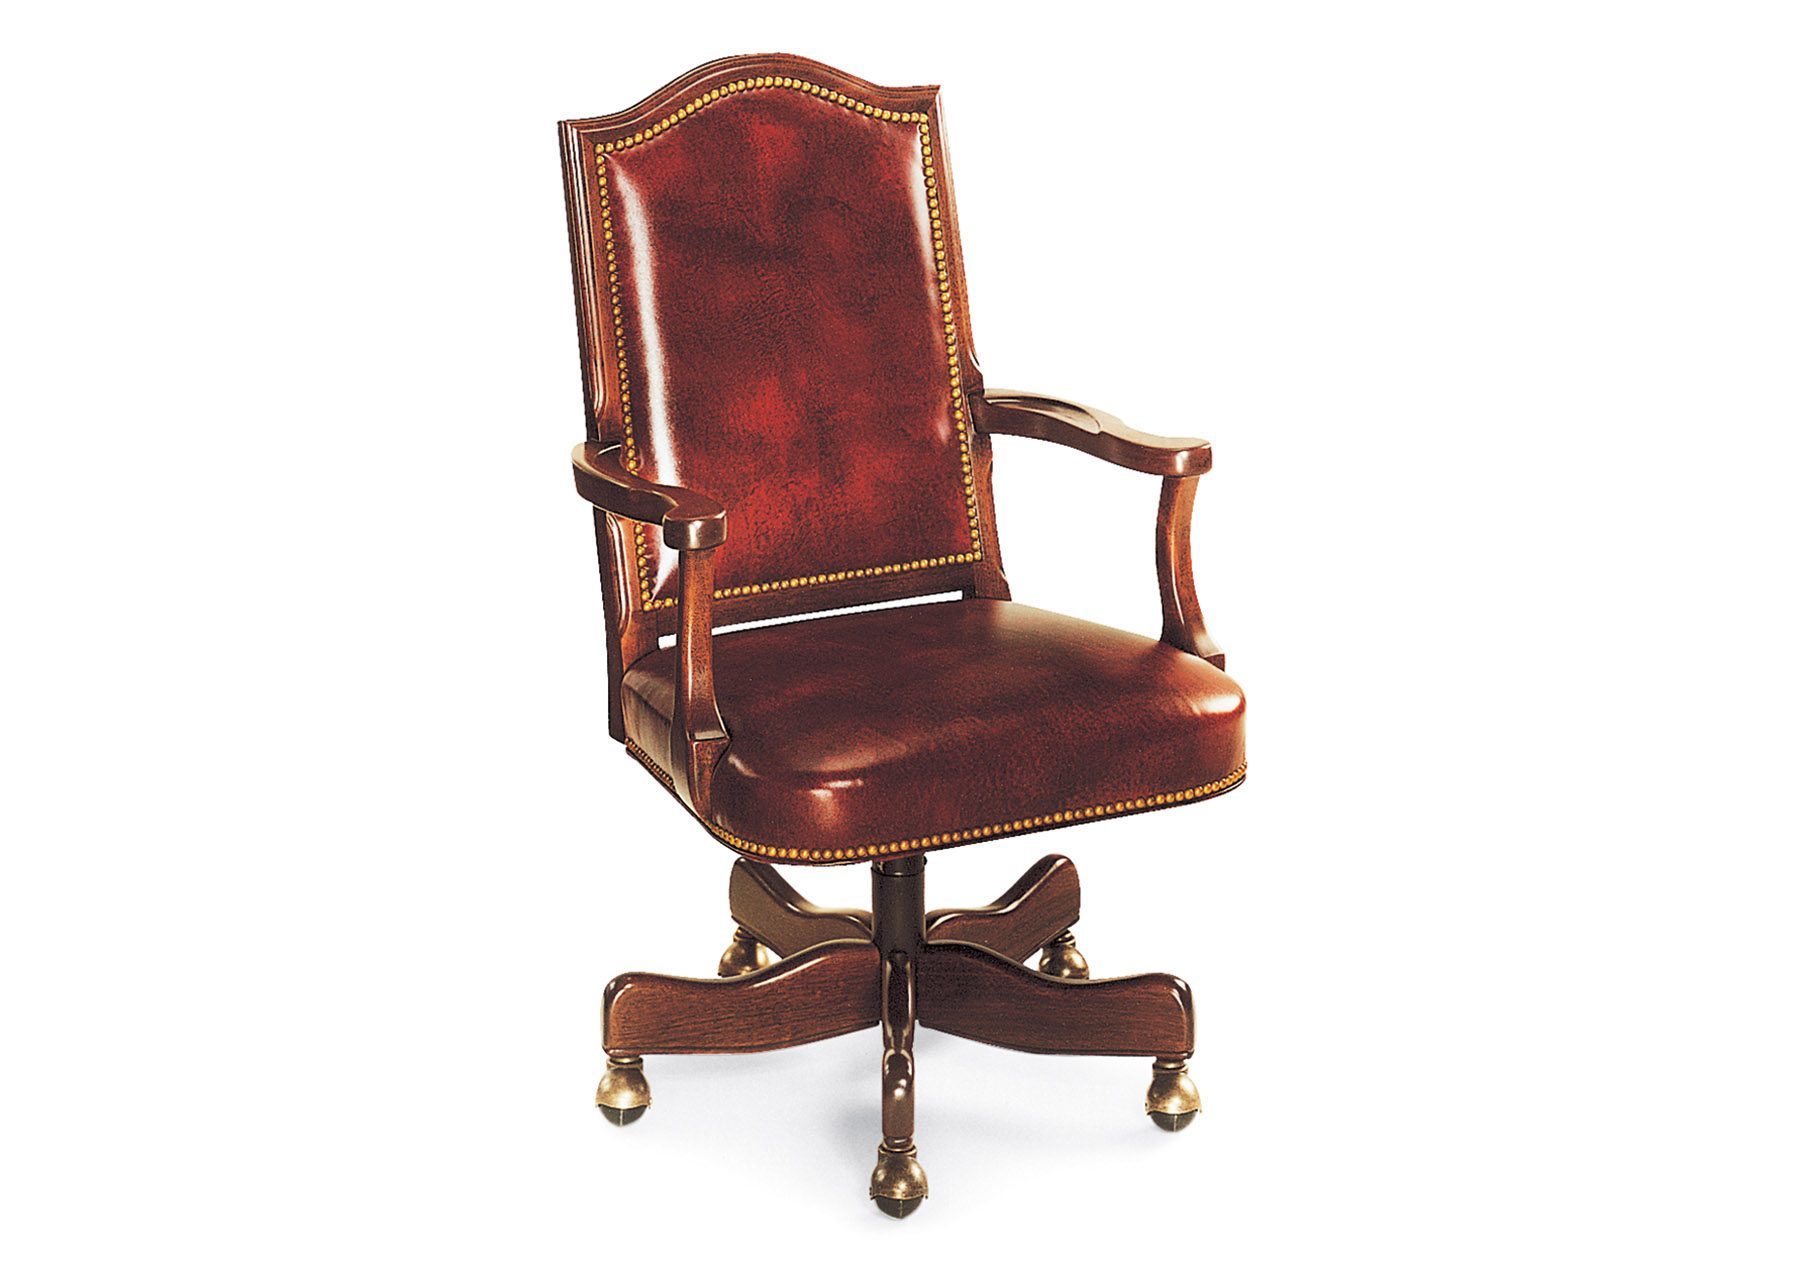 Cabot Wrenn Legends Stafford Swivel Chair